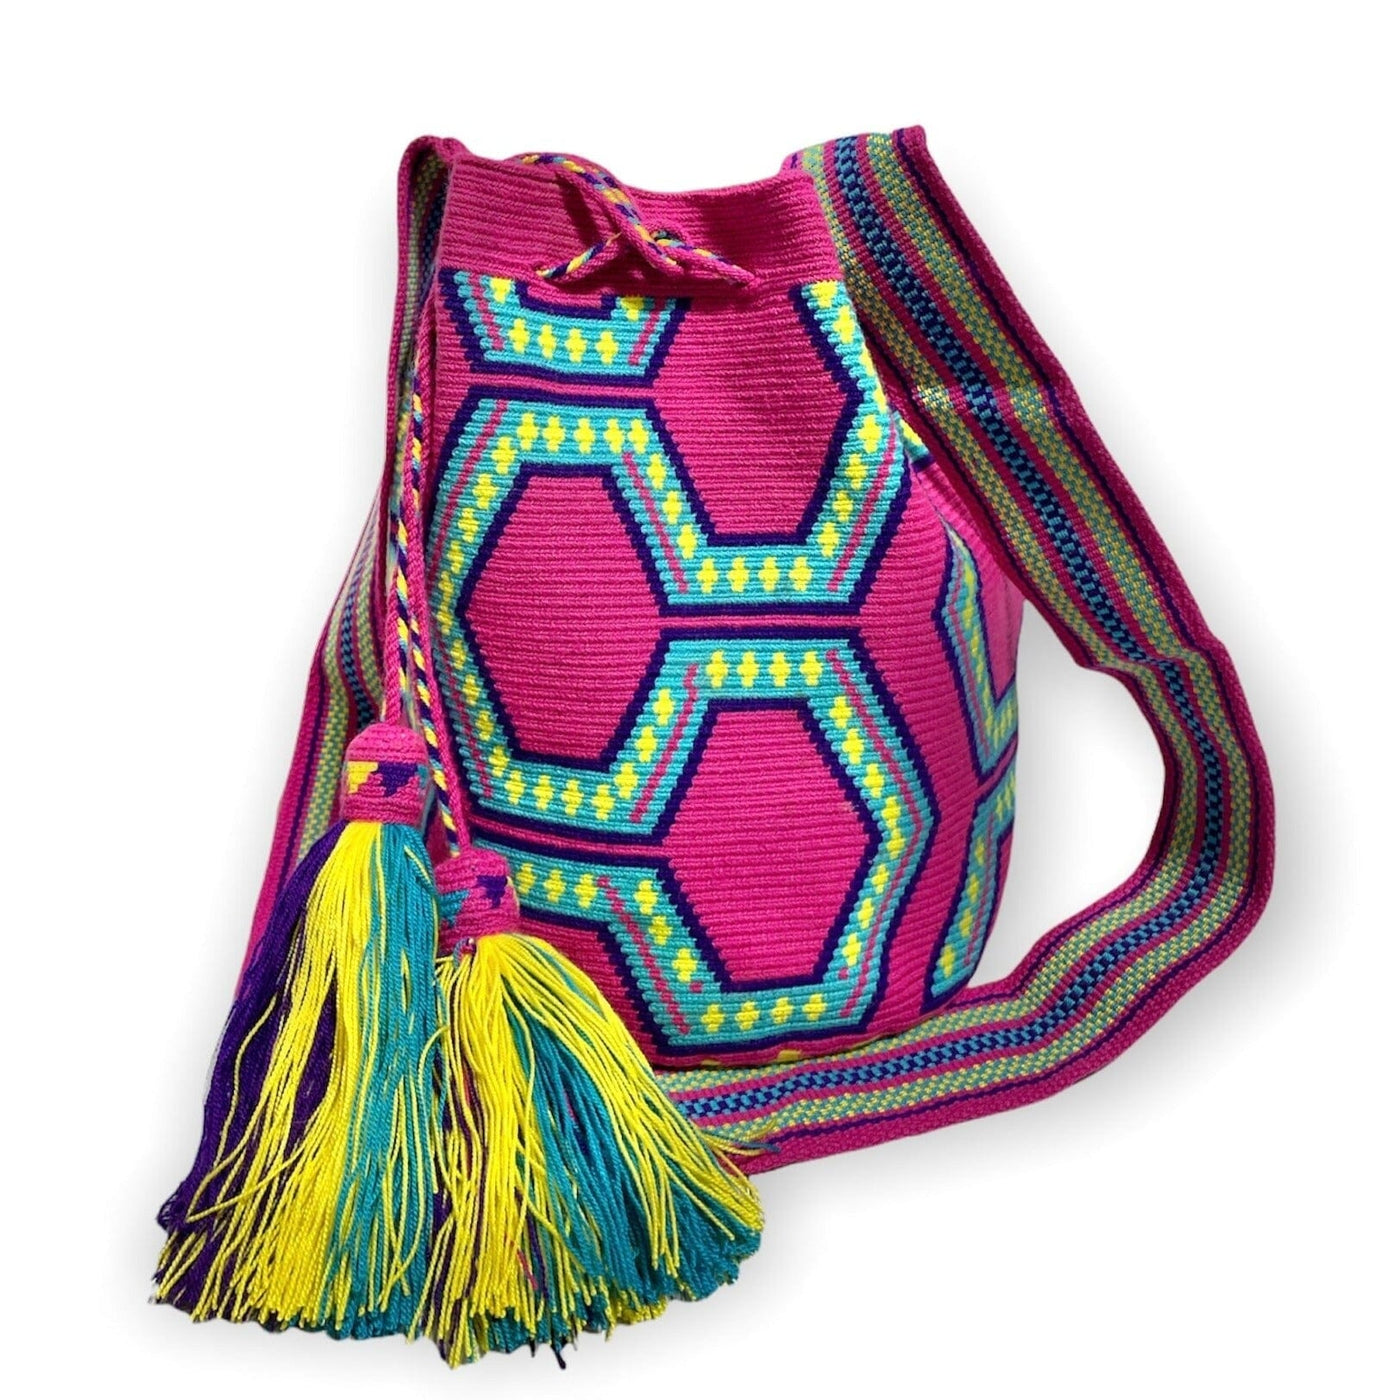 Fuschia Boho Neon Beach Bags for Summer | Premium Crochet Bags | Colorful 4U